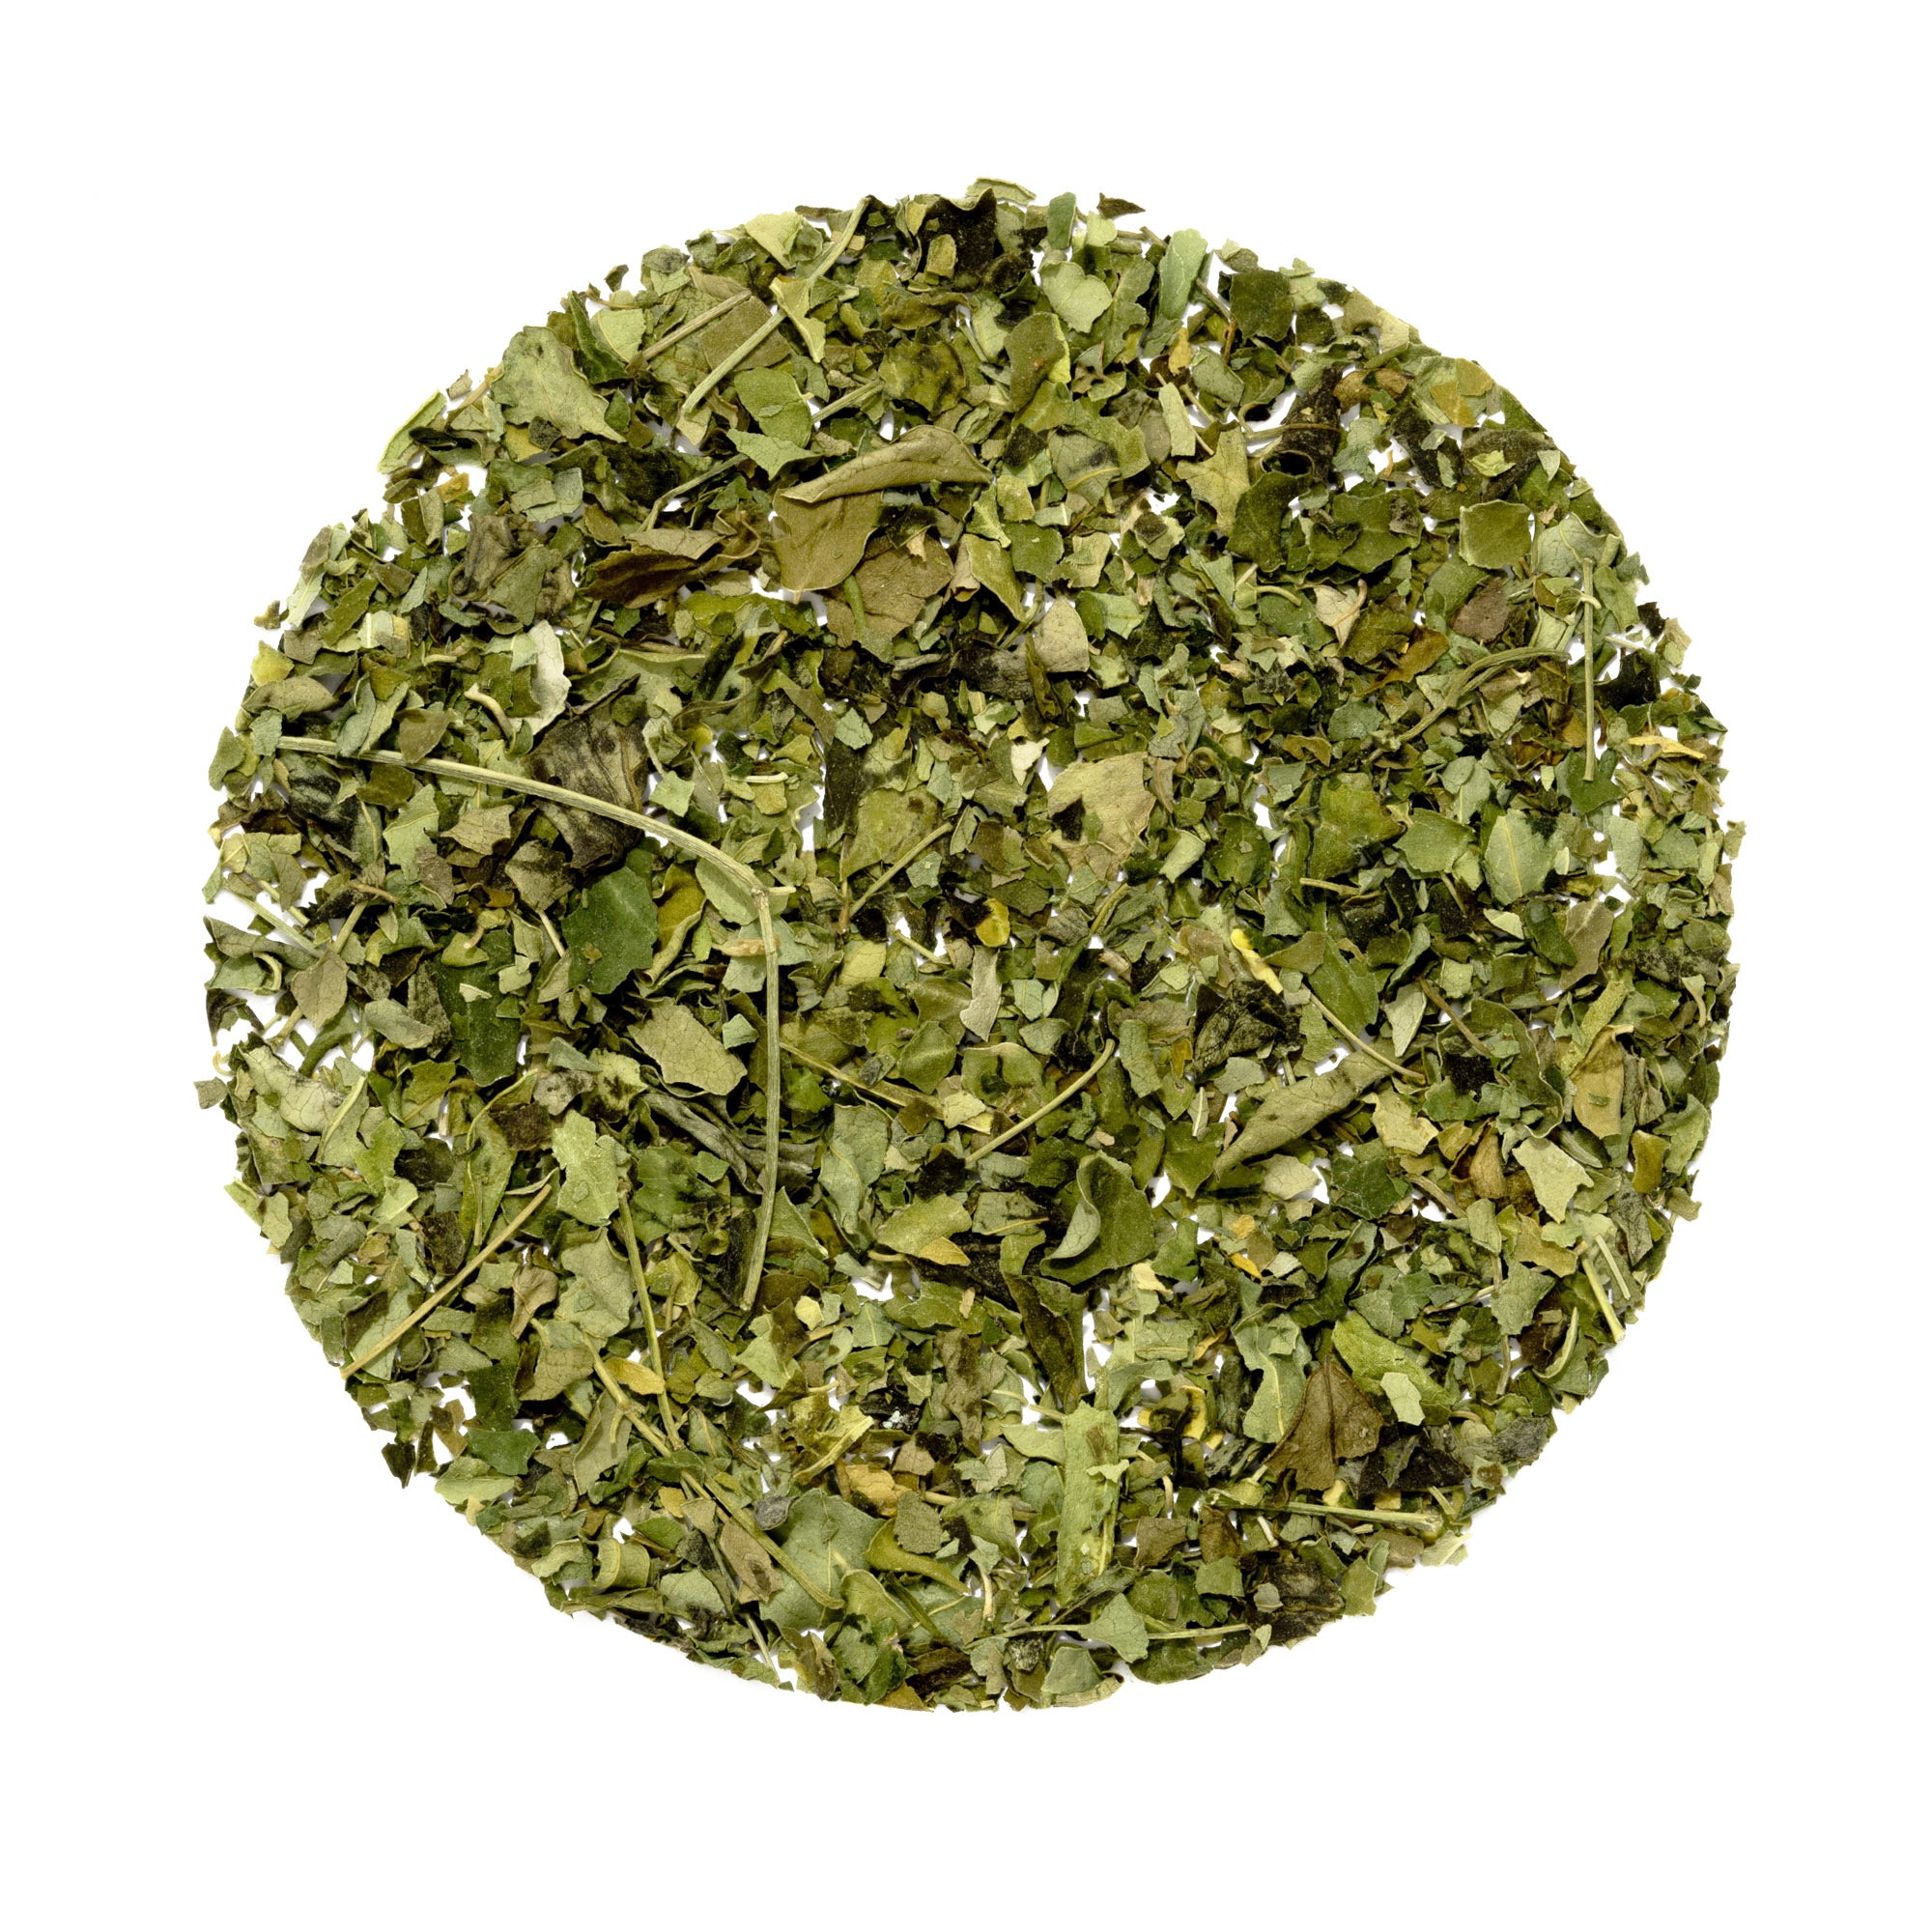 Organic Moringa - Loose Leaf Herbal Tea & Superfood - Antioxidant Rich, Anti-inflammatory, Anti-bacterial, Cancer fighting, Highly Nutritious | Heavenly Tea Leaves